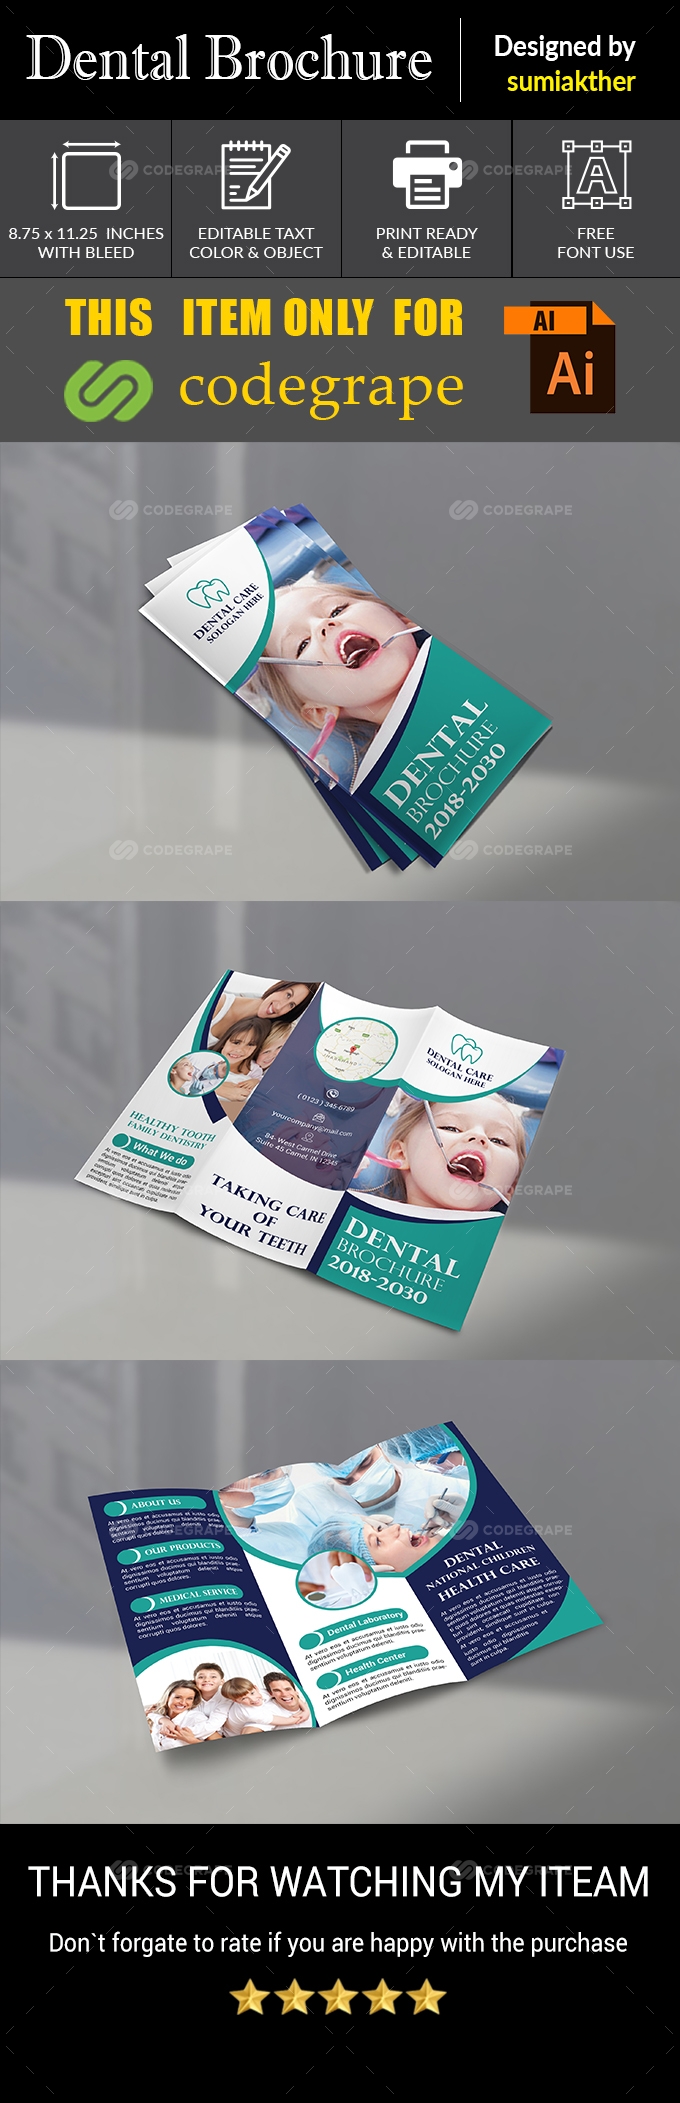 Corporate Trifold Dental Brochure